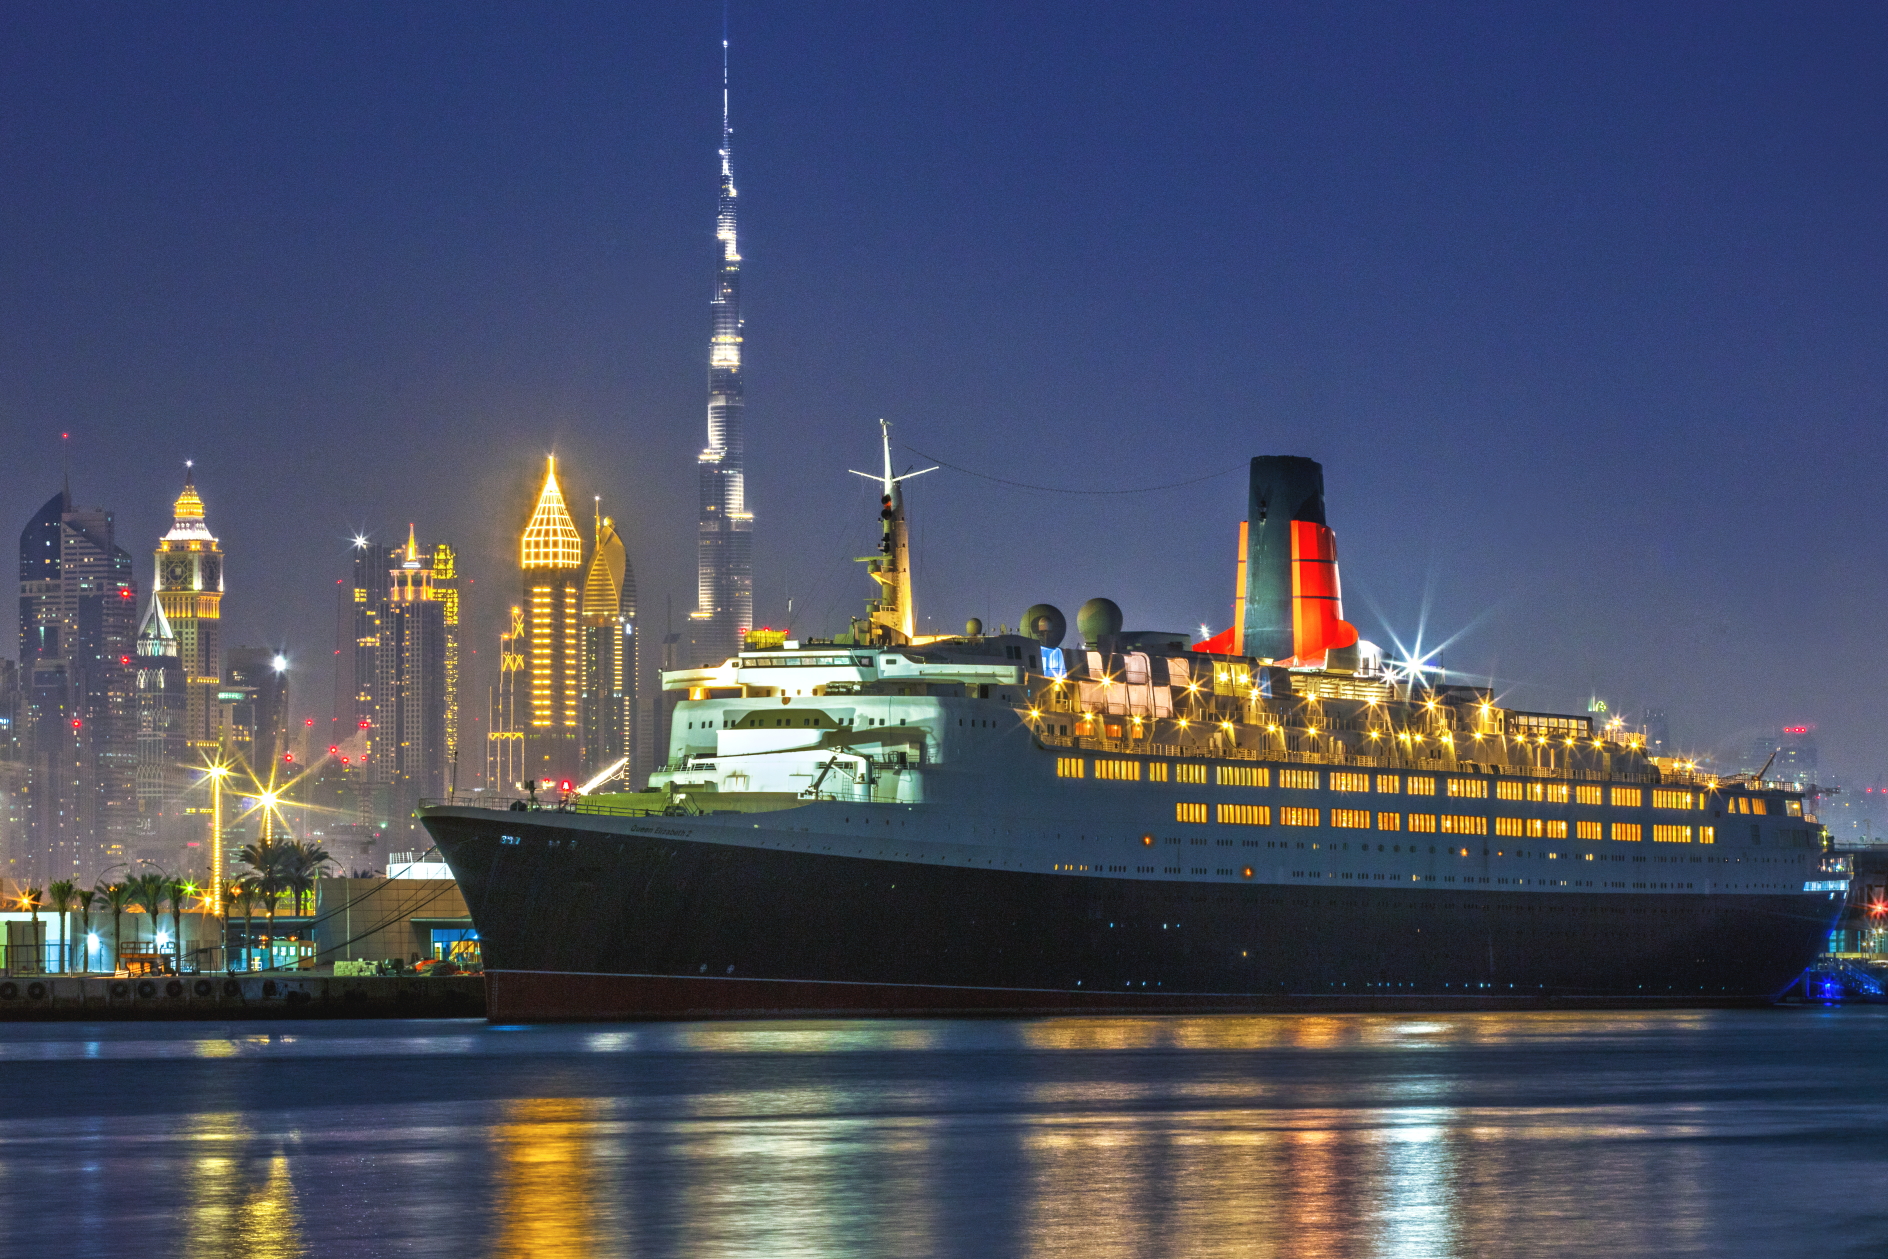 Queen Elizabeth 2 (QE2) cruise ship in Dubai. Click to enlarge.